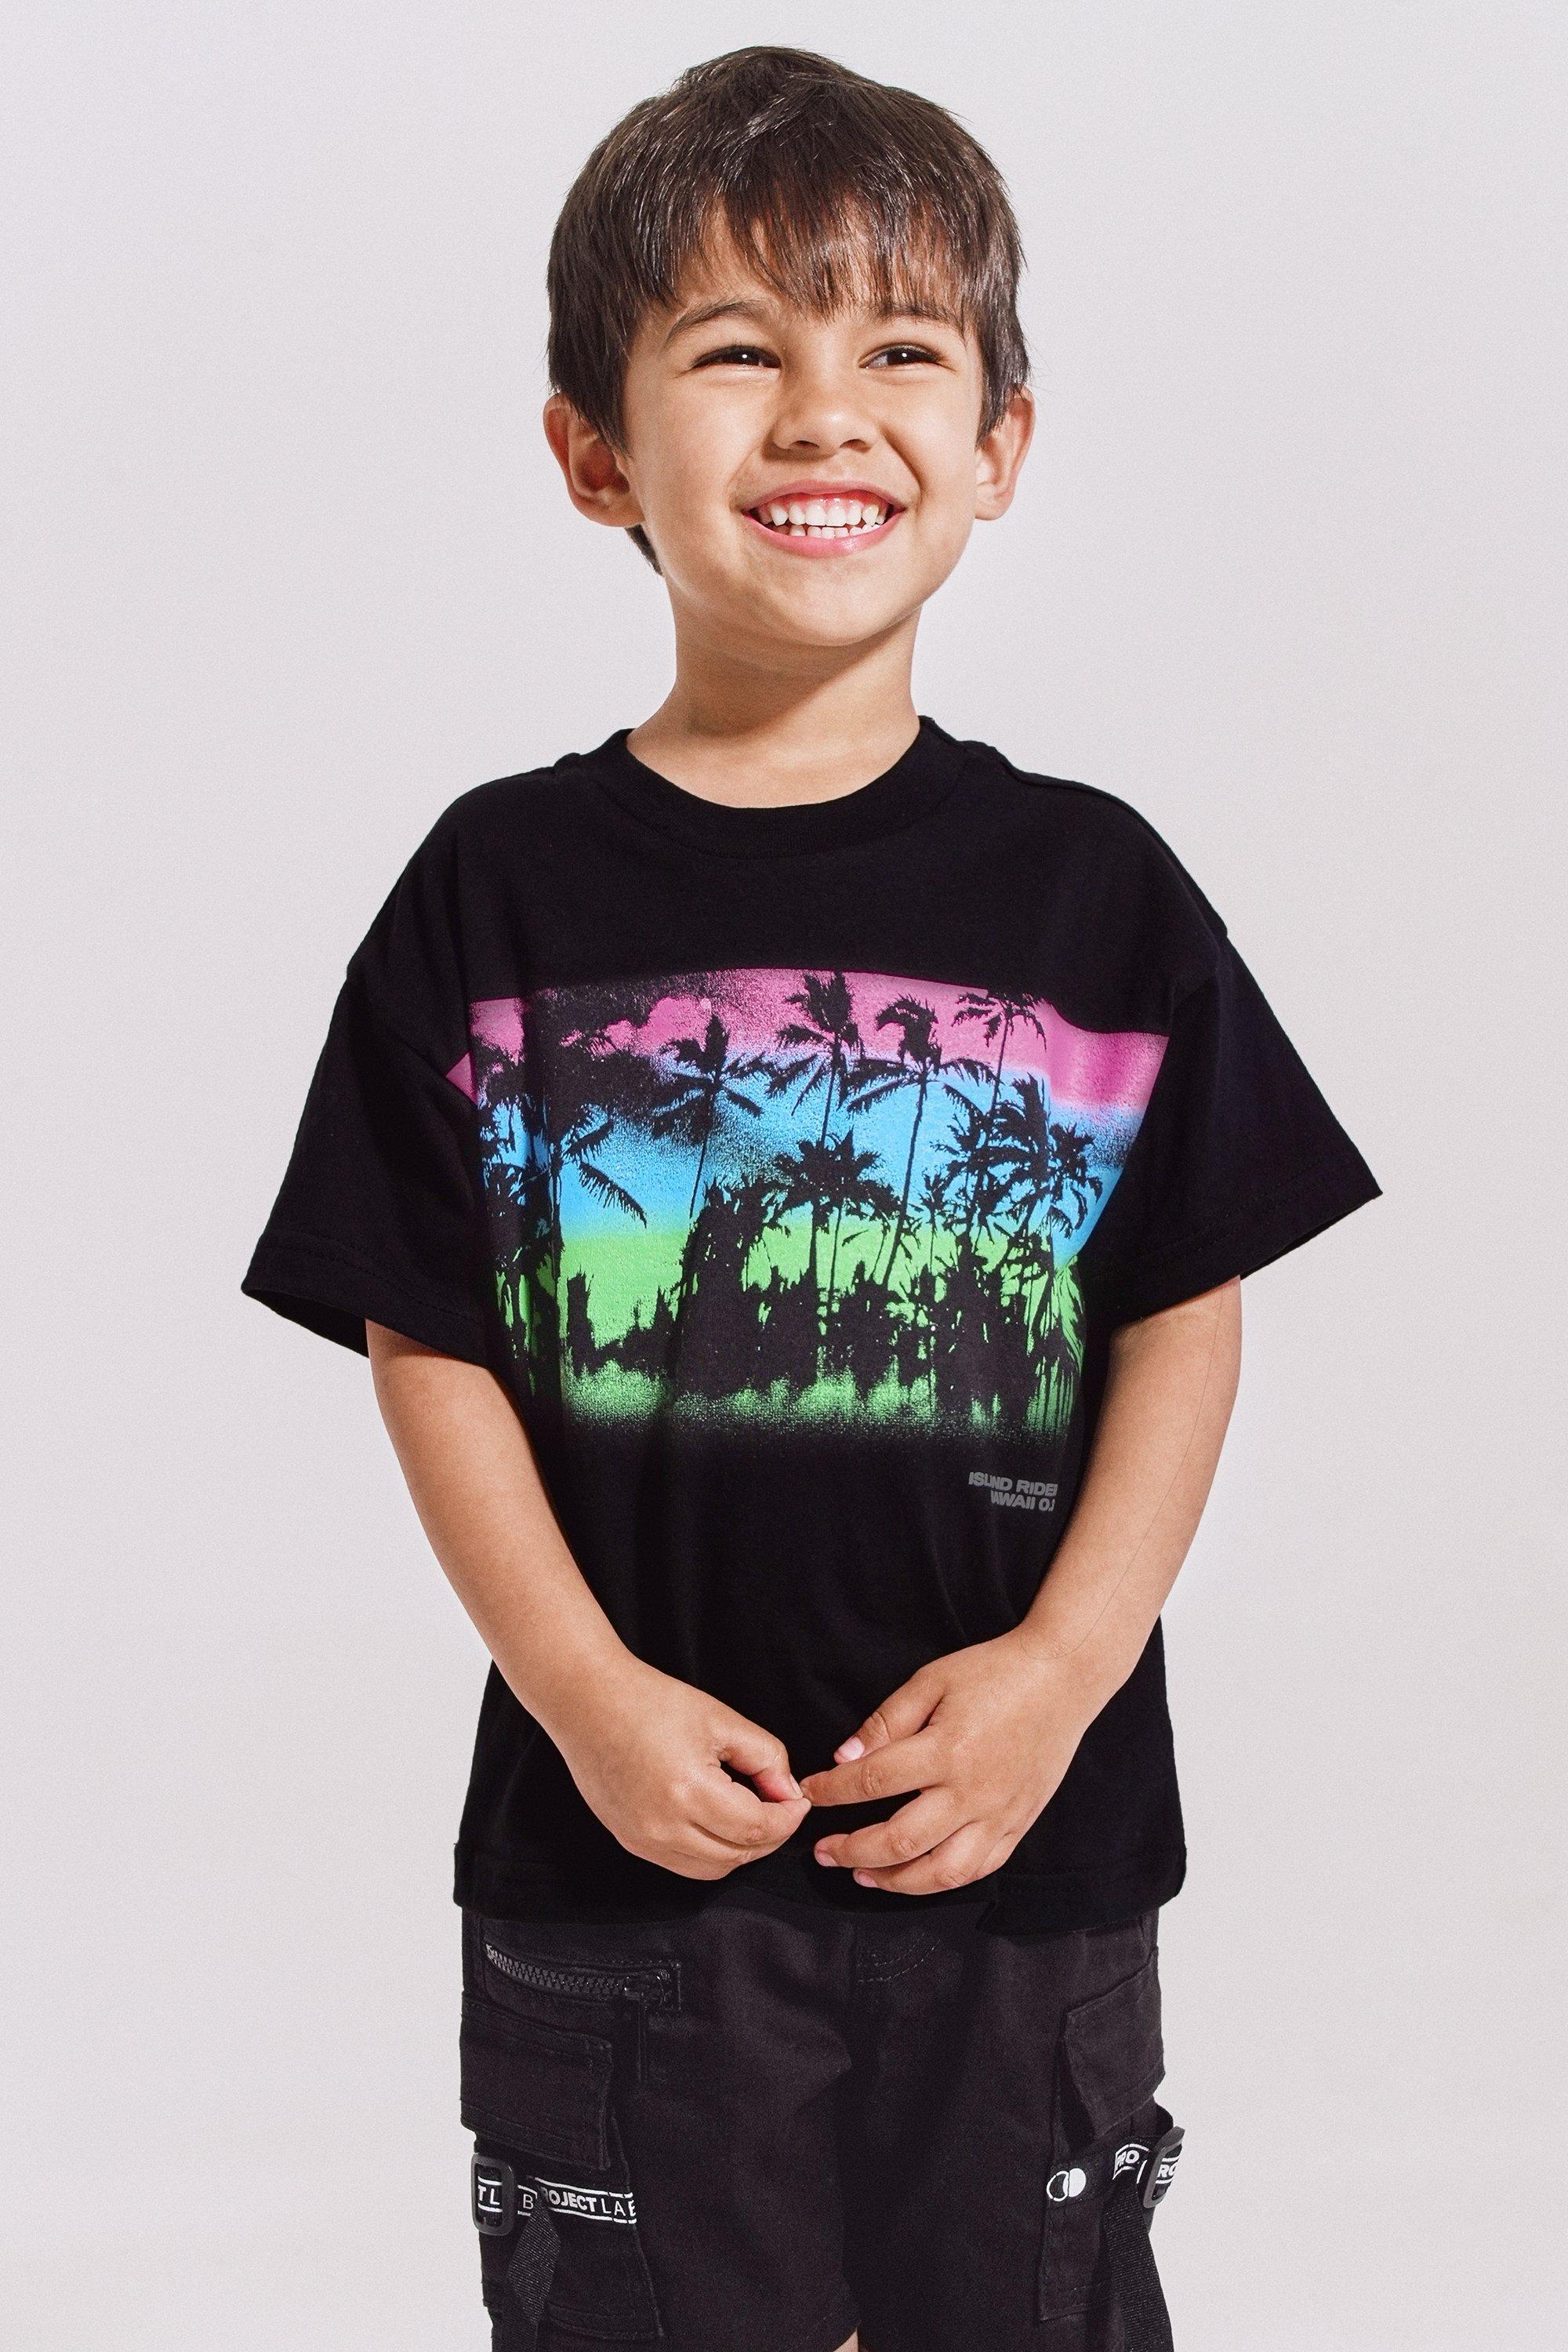 Autumn Spring Baby Boy Fashion Formal Clothing Set Kid Suits Set Plaid  Shirt Pants 2pac/set Children Clothes Set 1 2 3 4 5 Years